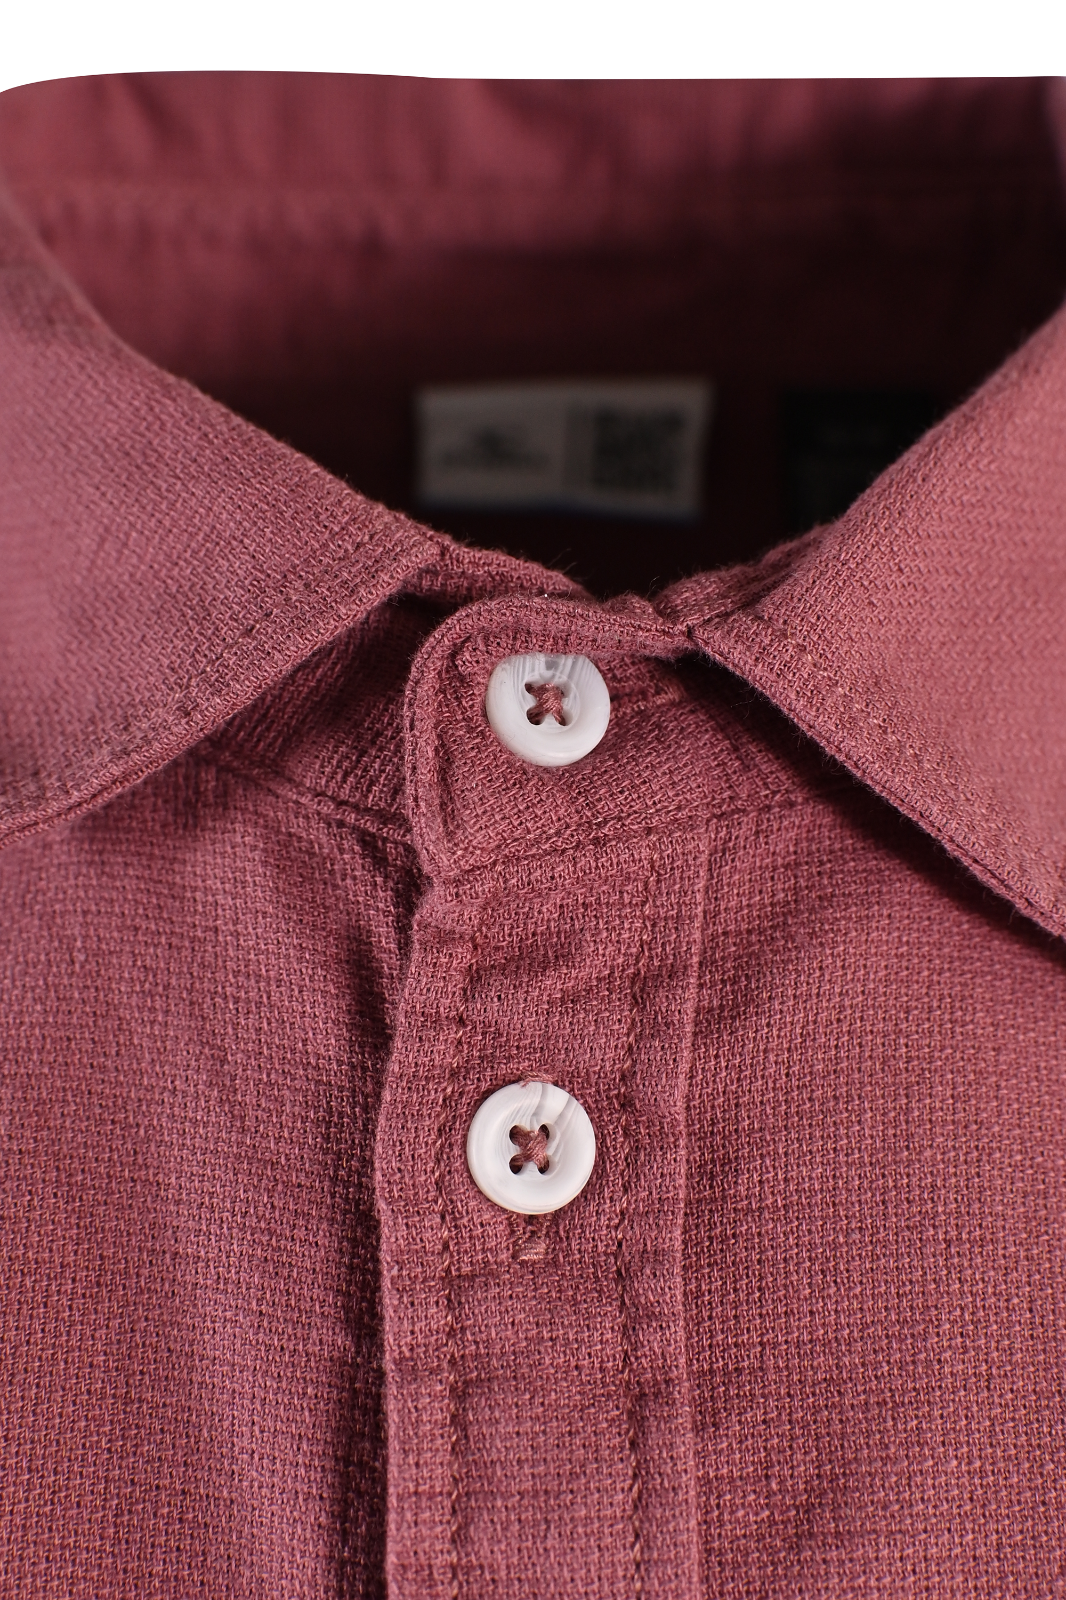 O'Neill Men's Woven Shirt Solid Mohagany Red Chambray Pocket Short Sleeve (S09)